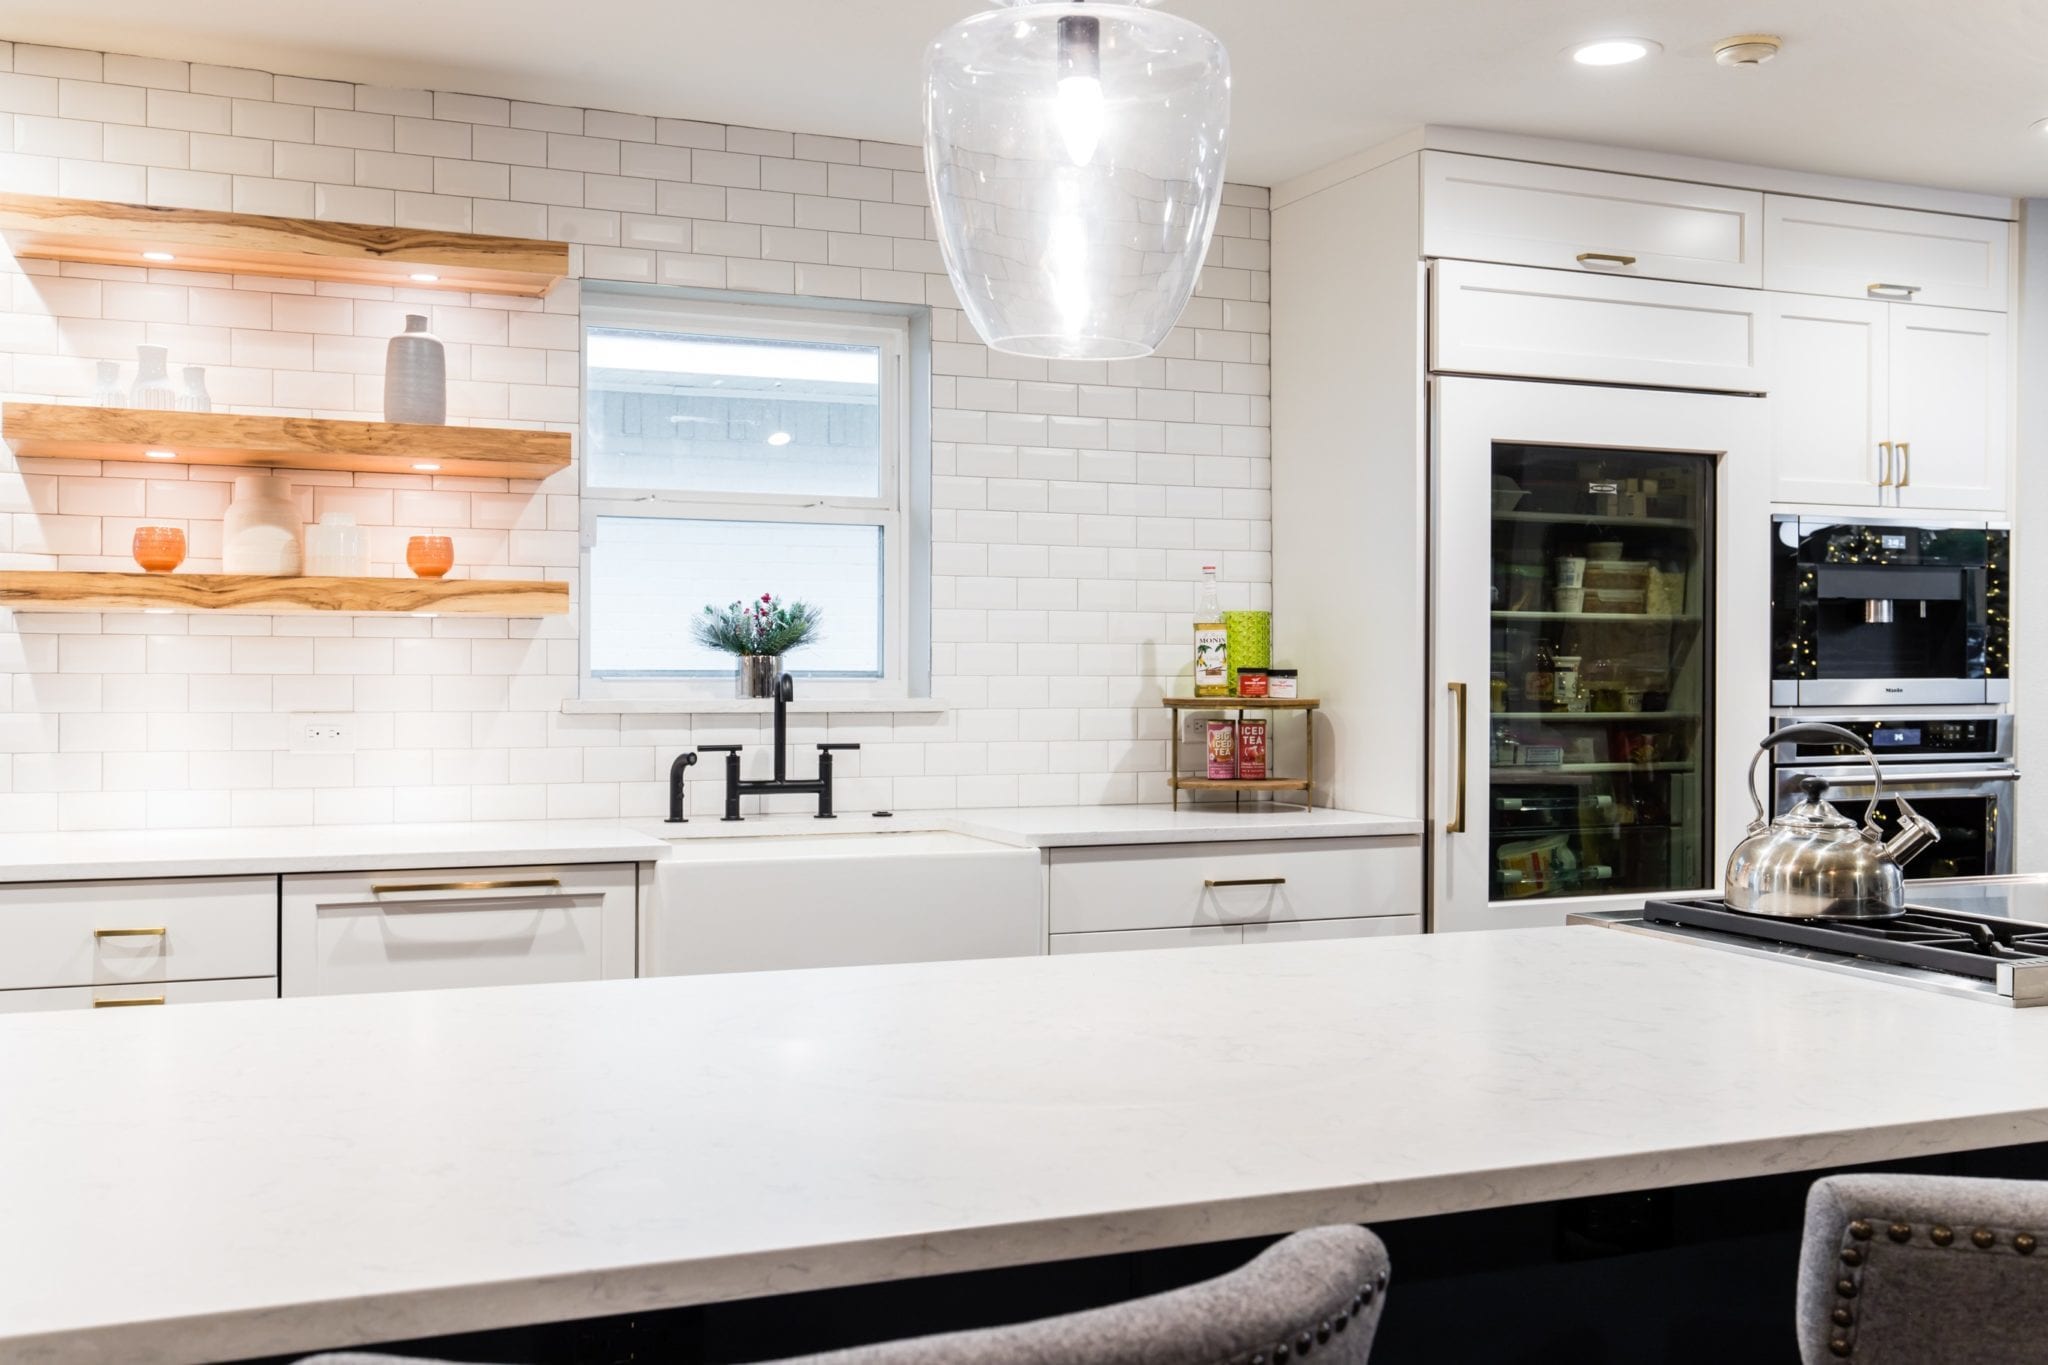 Single-Family-Home-Kitchen-Remodel-Backsplash-Open-Shelves-Sink-Custom-Cabinets-Light-Fixtures-HighlandMeadows-75238_1